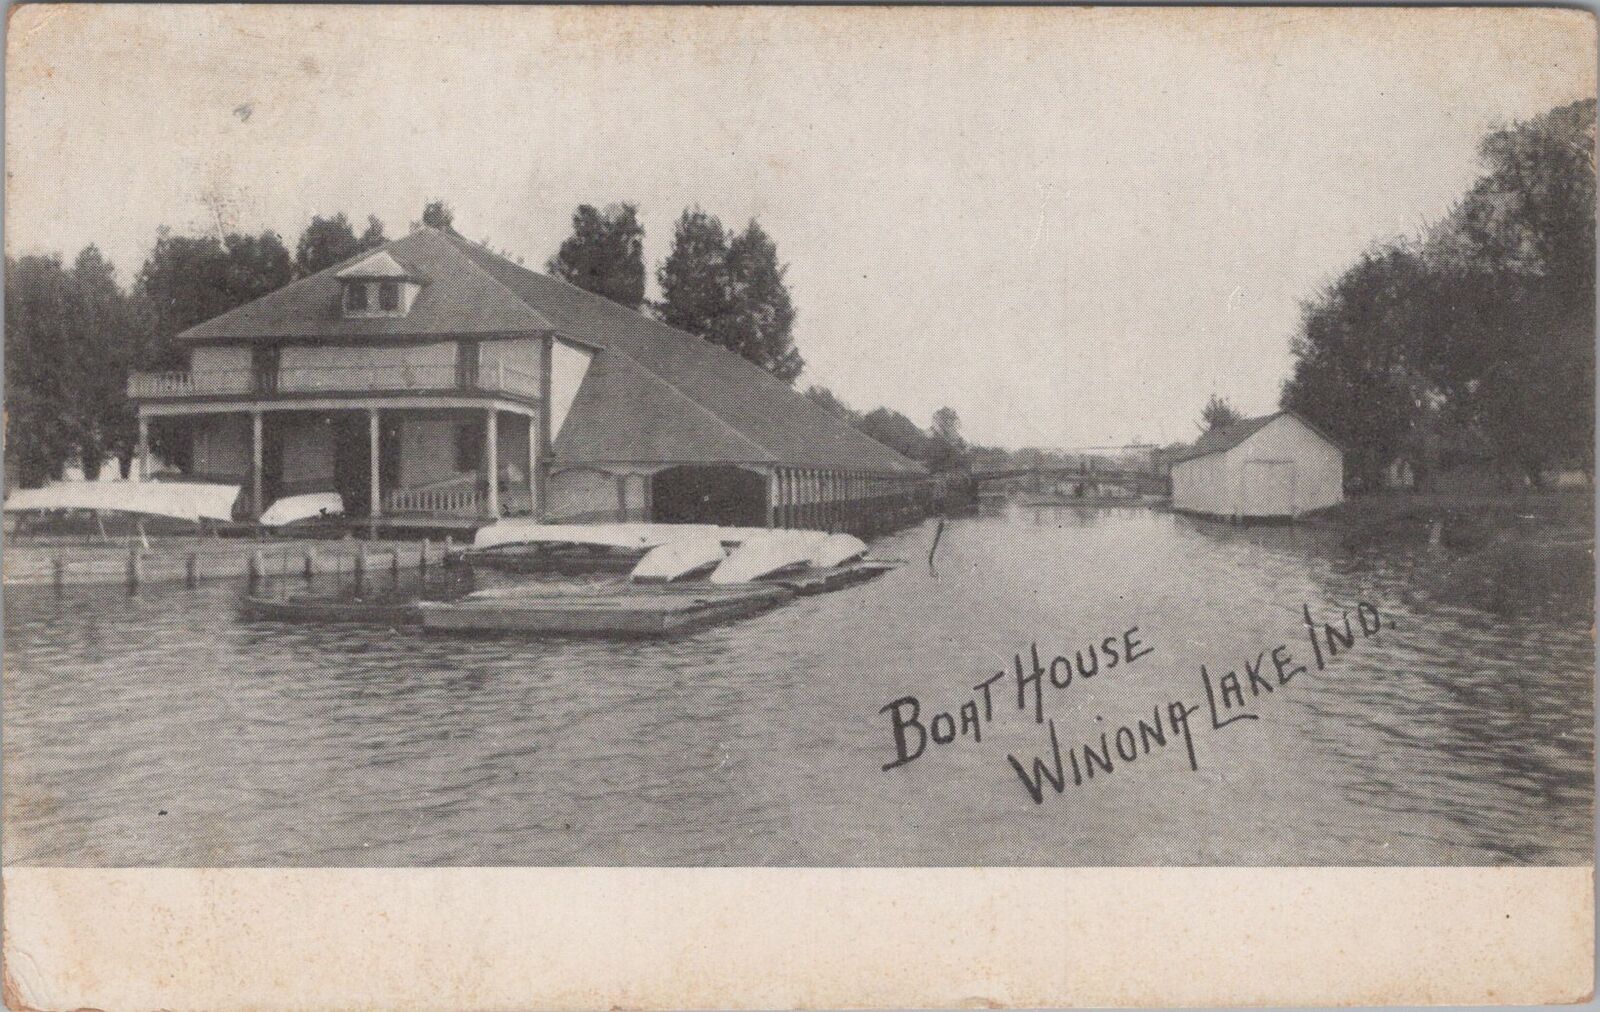 Boat House Winona Lake Indiana 1908 Postcard